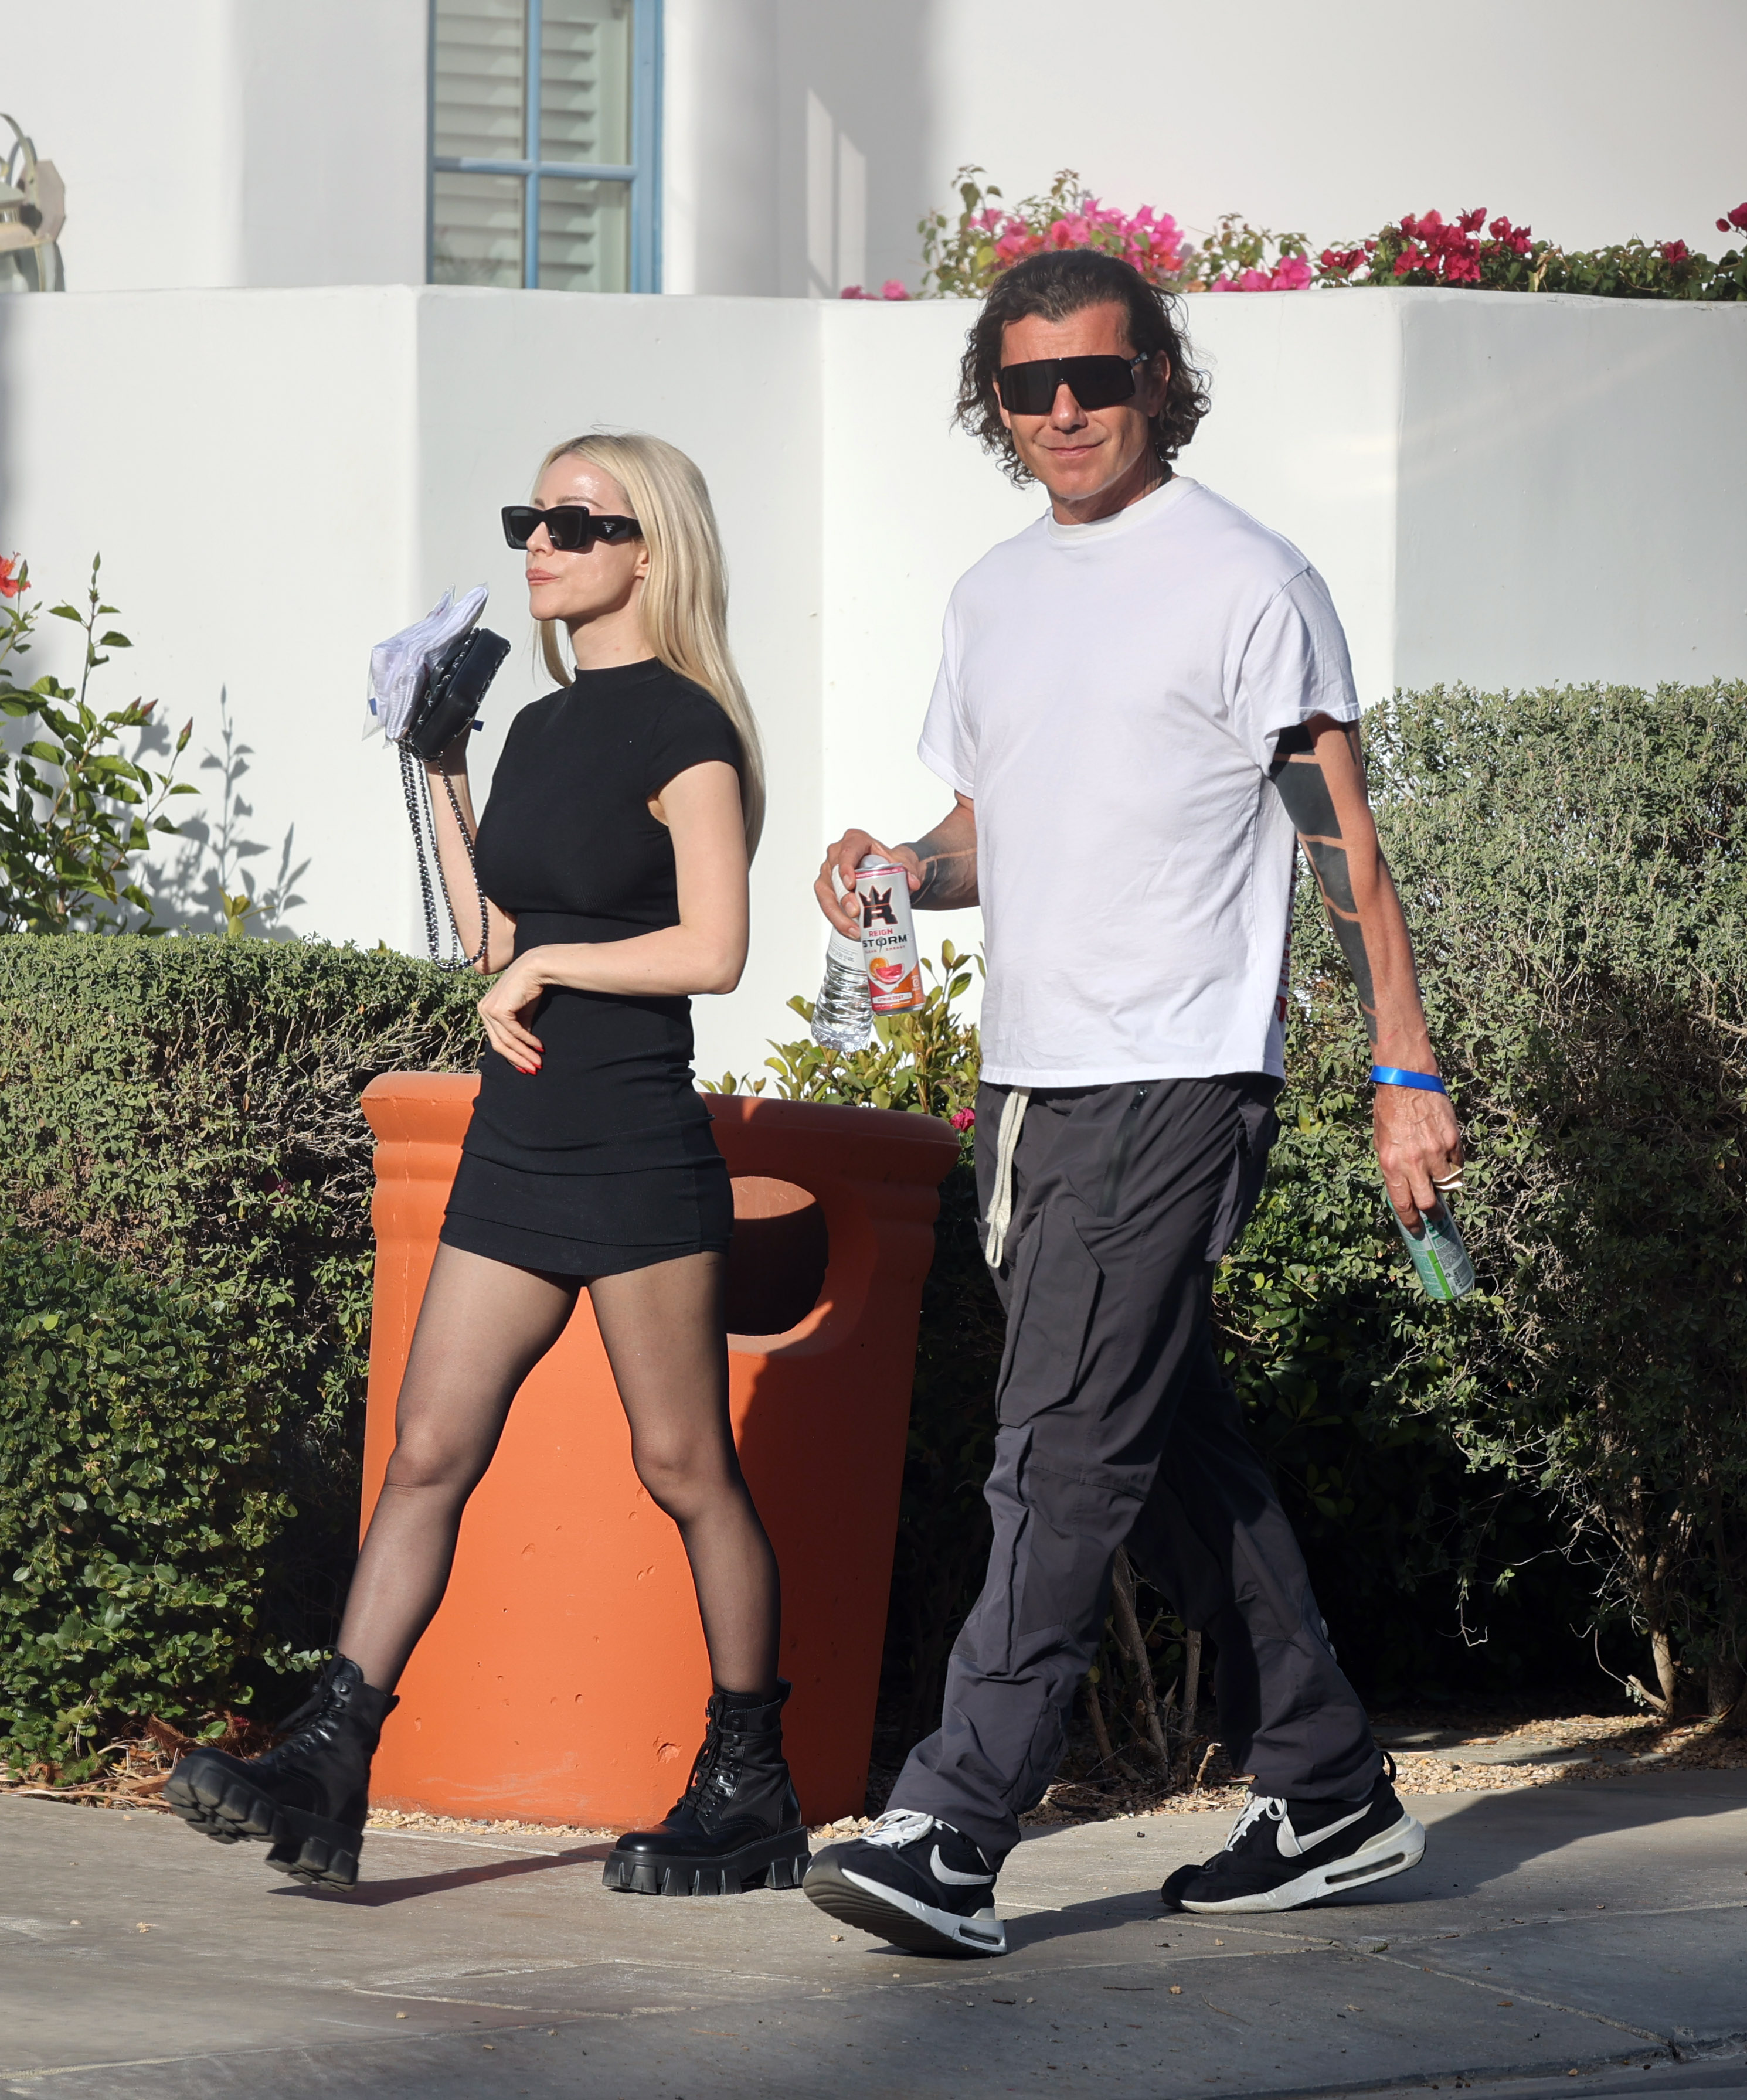 The couple took a walk through Palm Springs